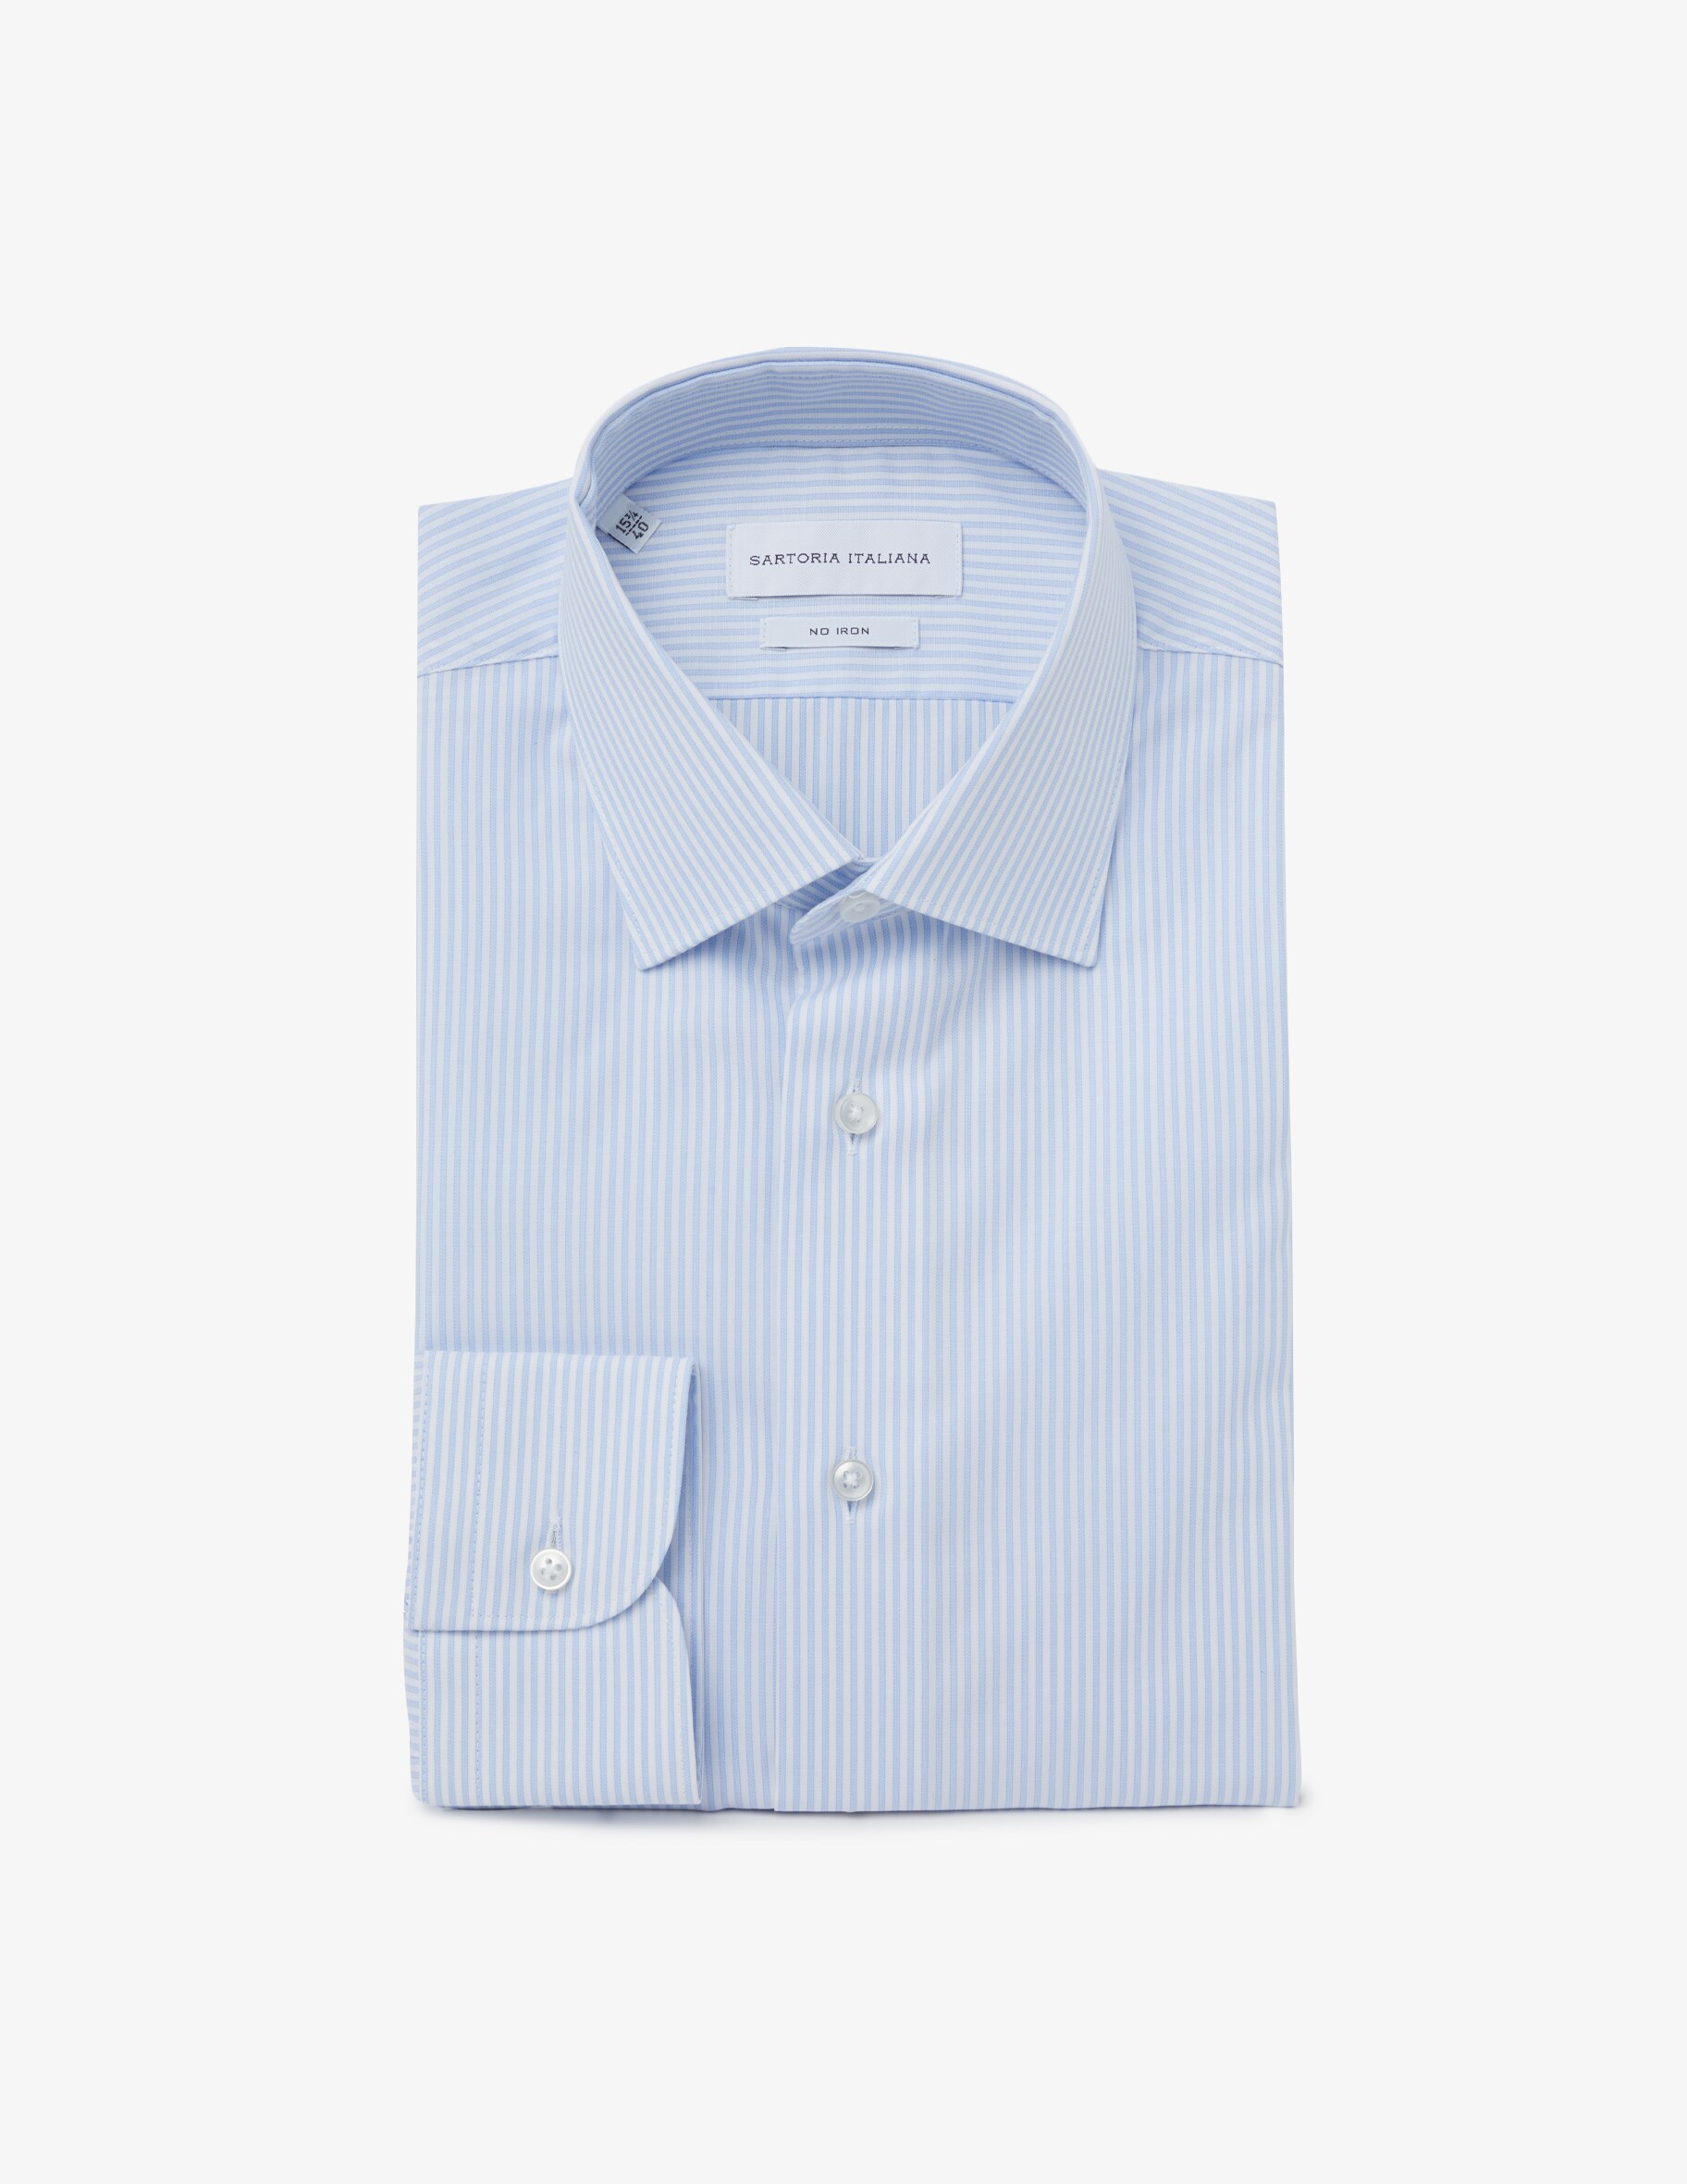 Рубашка современная на основе твила без утюга Sartoria Italiana, светло-синий